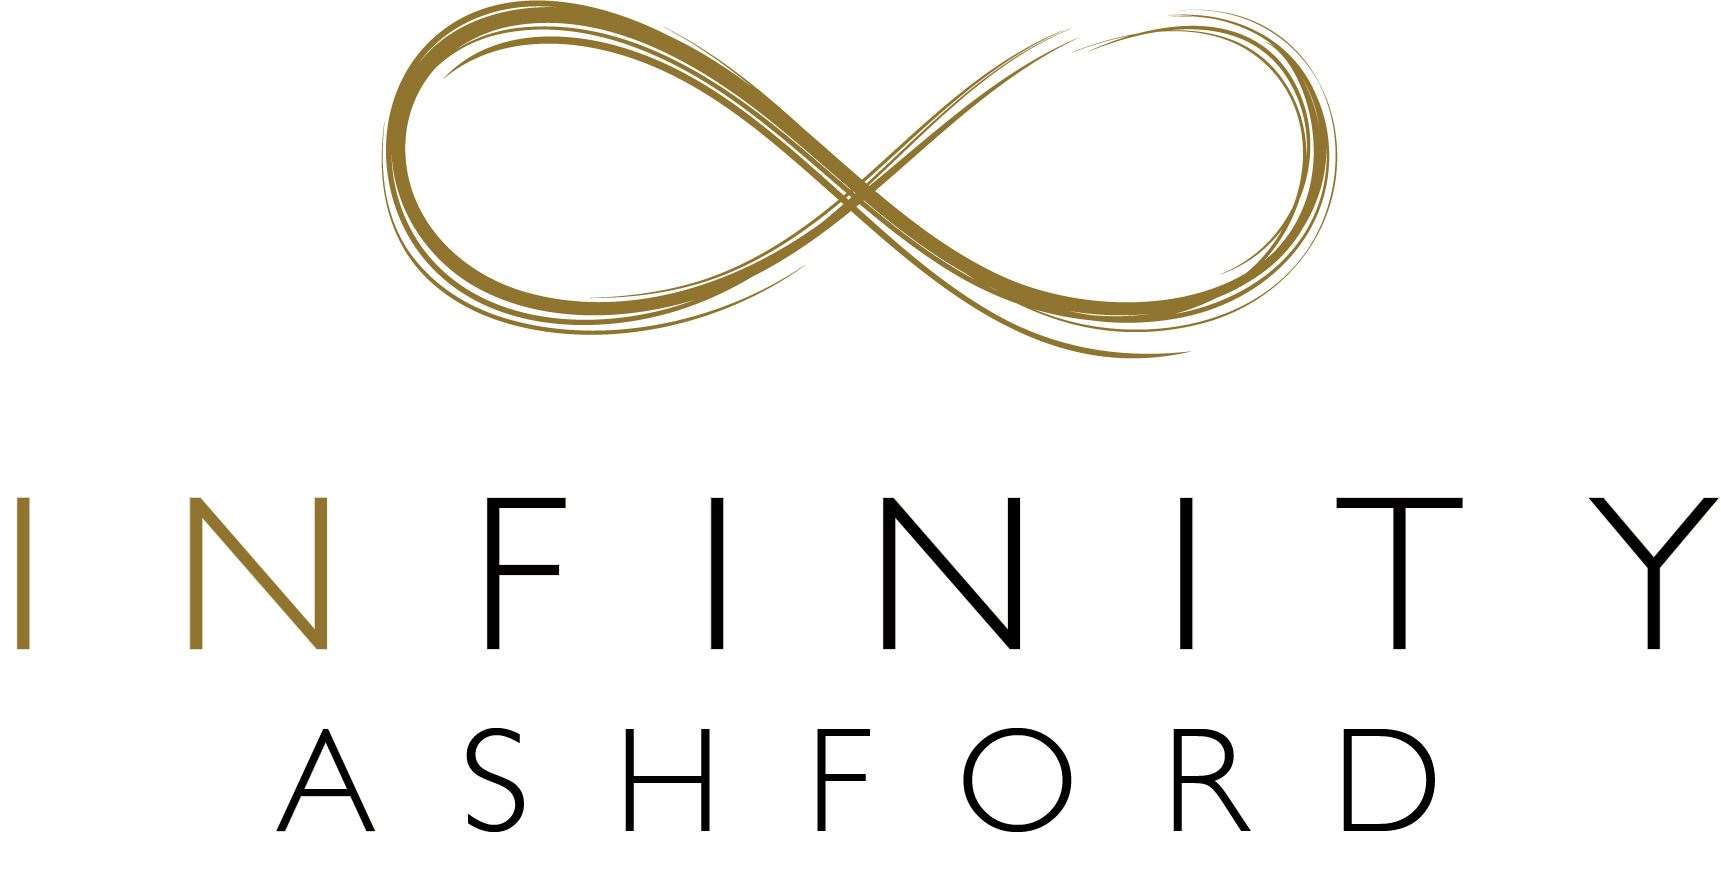 The newly-unveiled Infinity Ashford logo